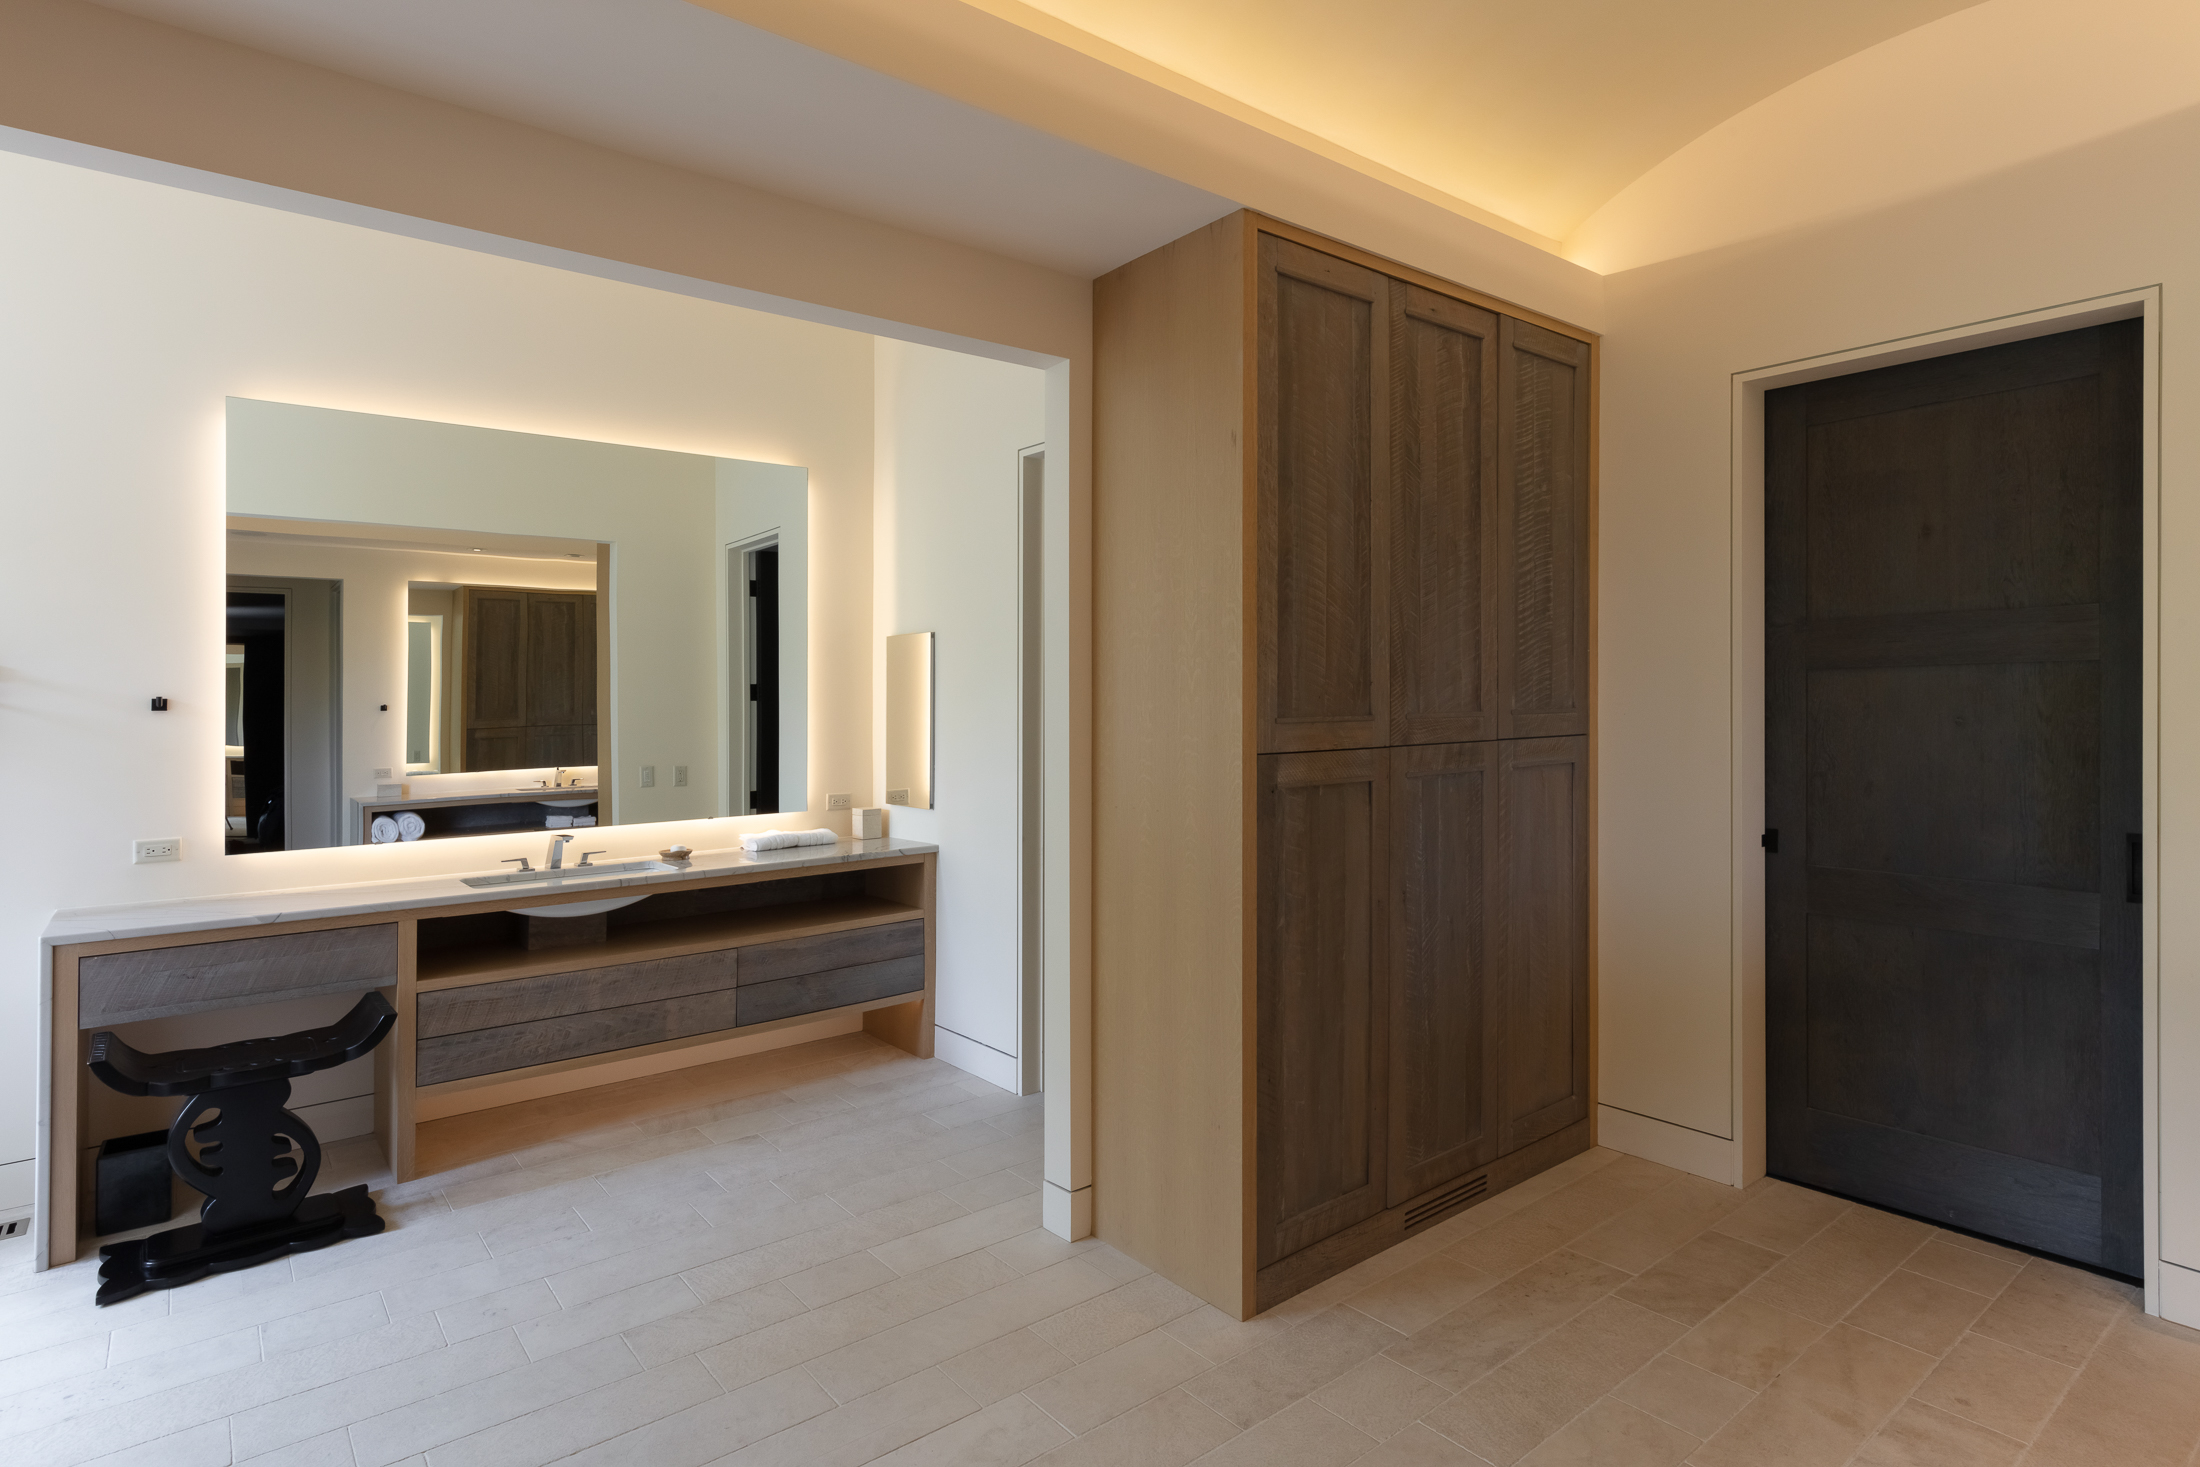 Minimalist bathroom built by best luxury homebuilder in North Carolina, Bluestone Construction